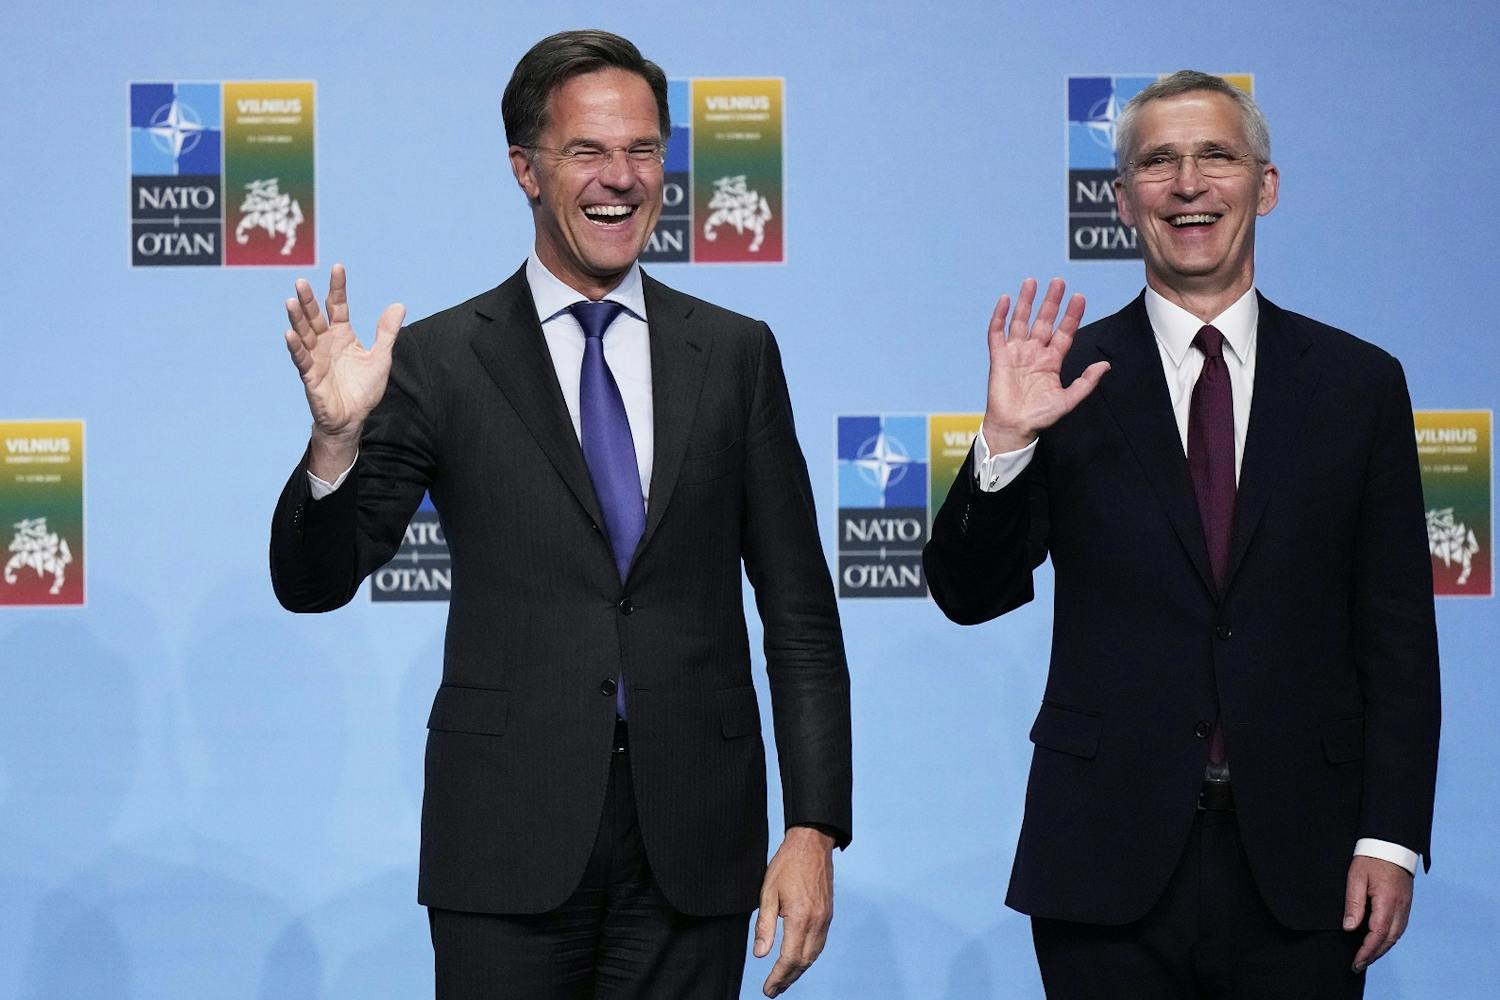 Rutte will not replace NATO Secretary General Stoltenberg